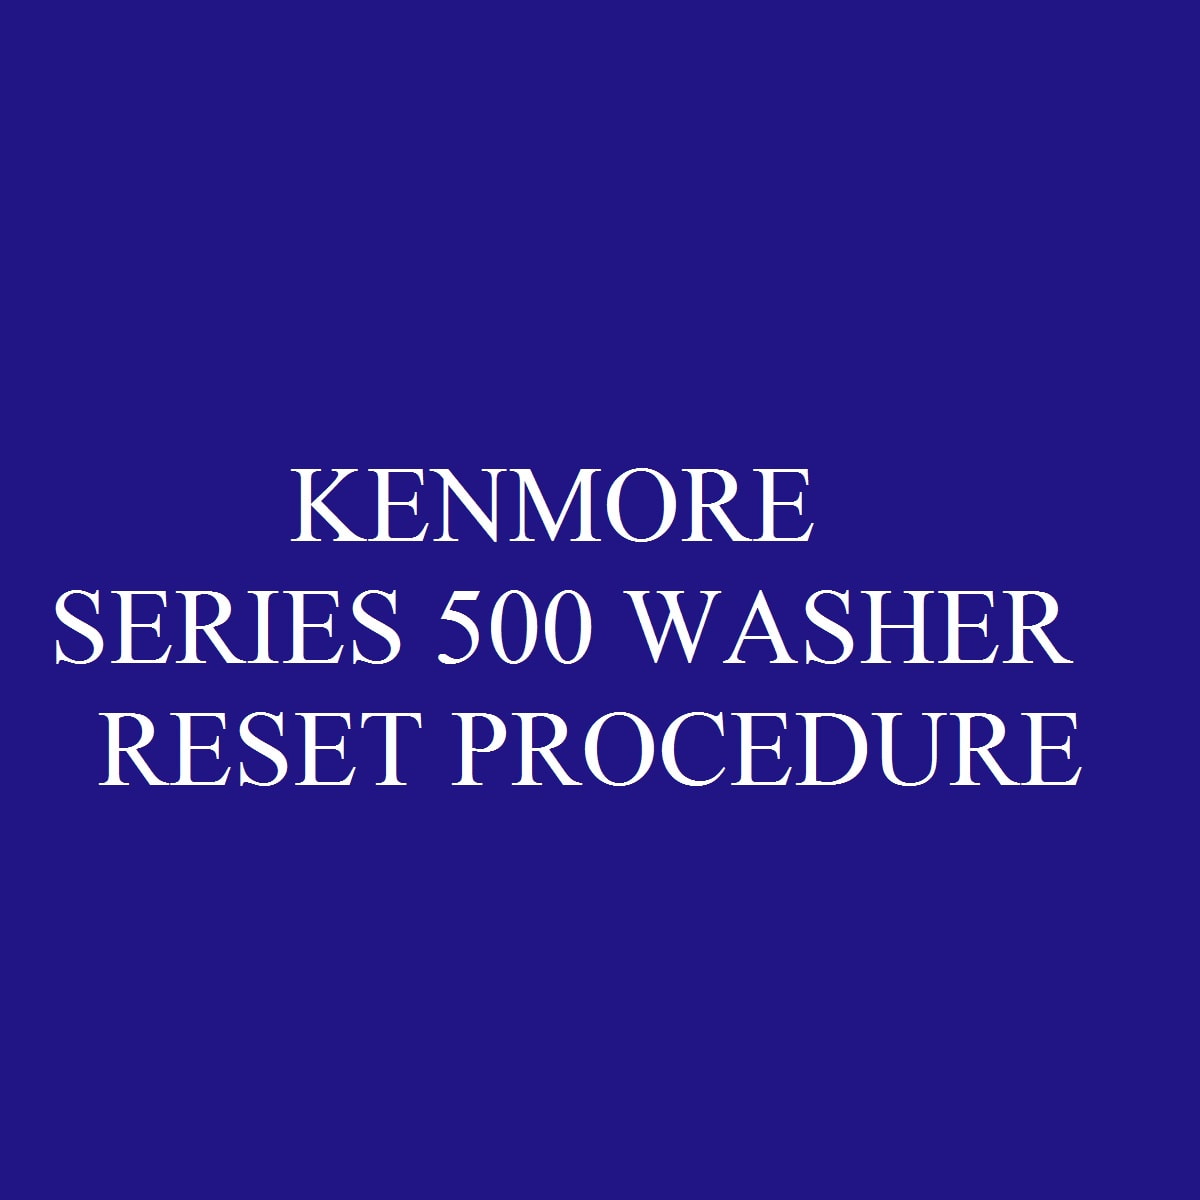 Kenmore series 500 washer reset